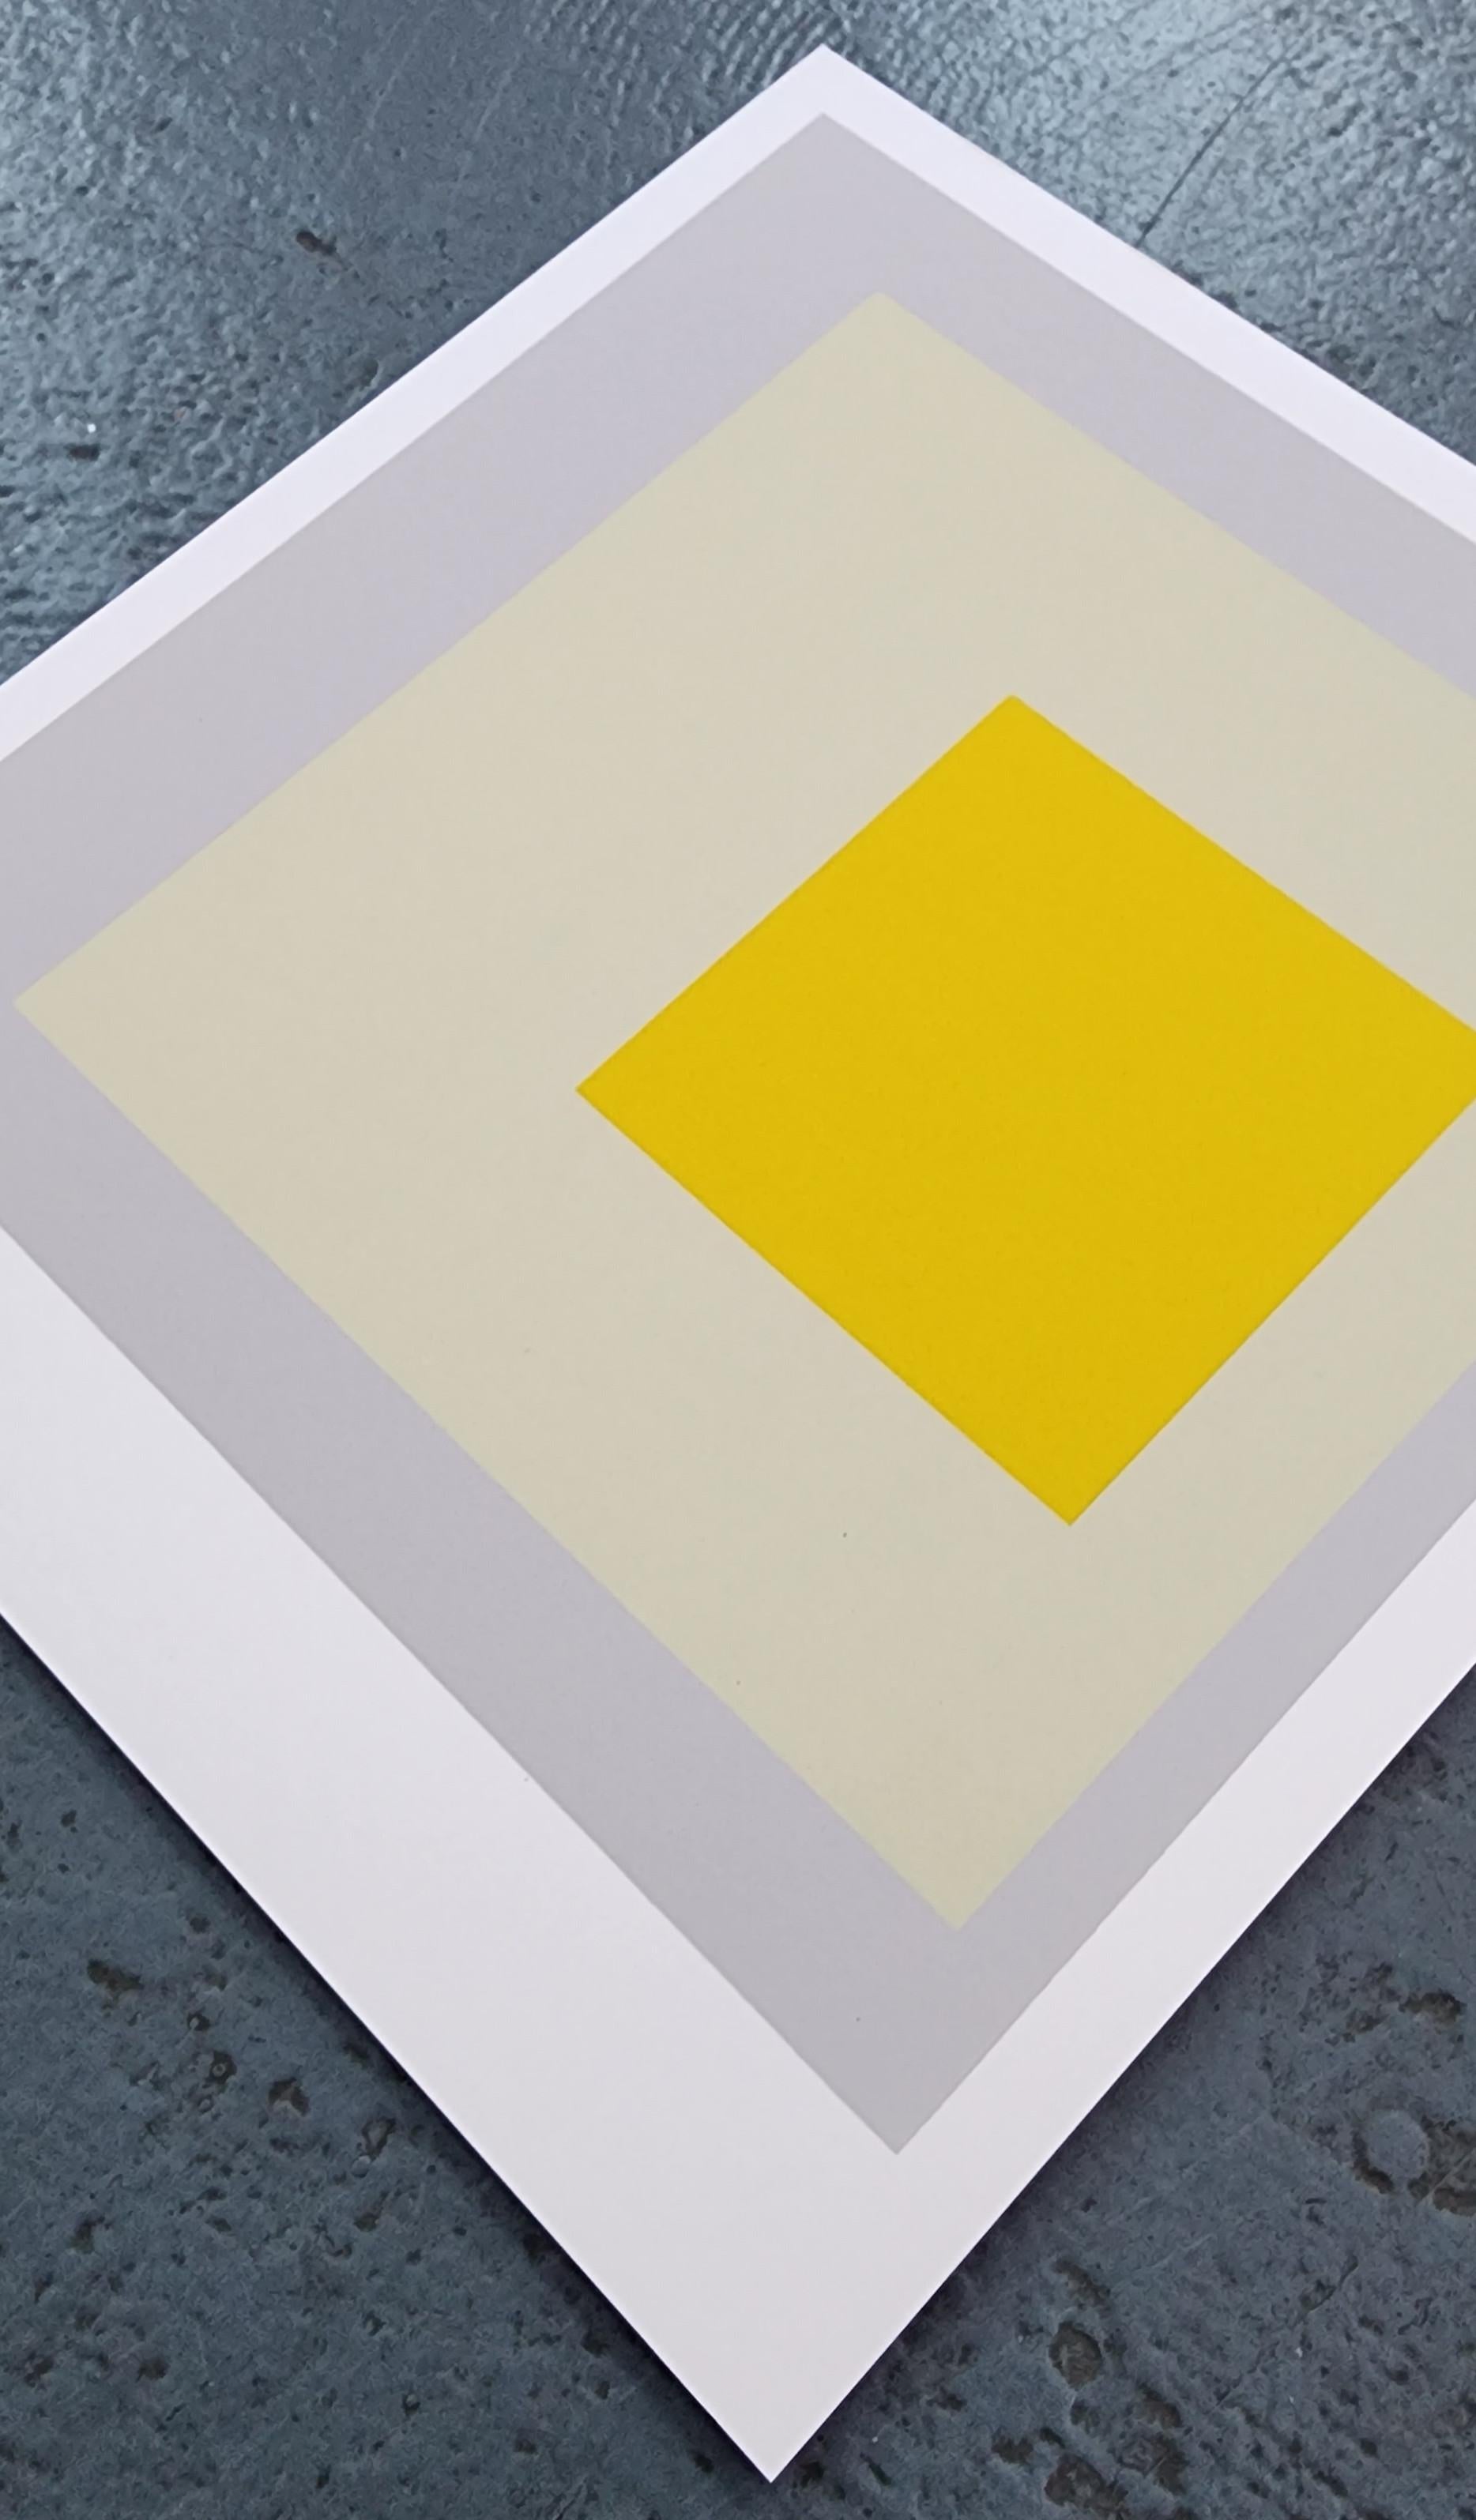 Homage to the Square: Impact (Bauhaus, Minimalismus, 50% OFF LIST PRICE) 2